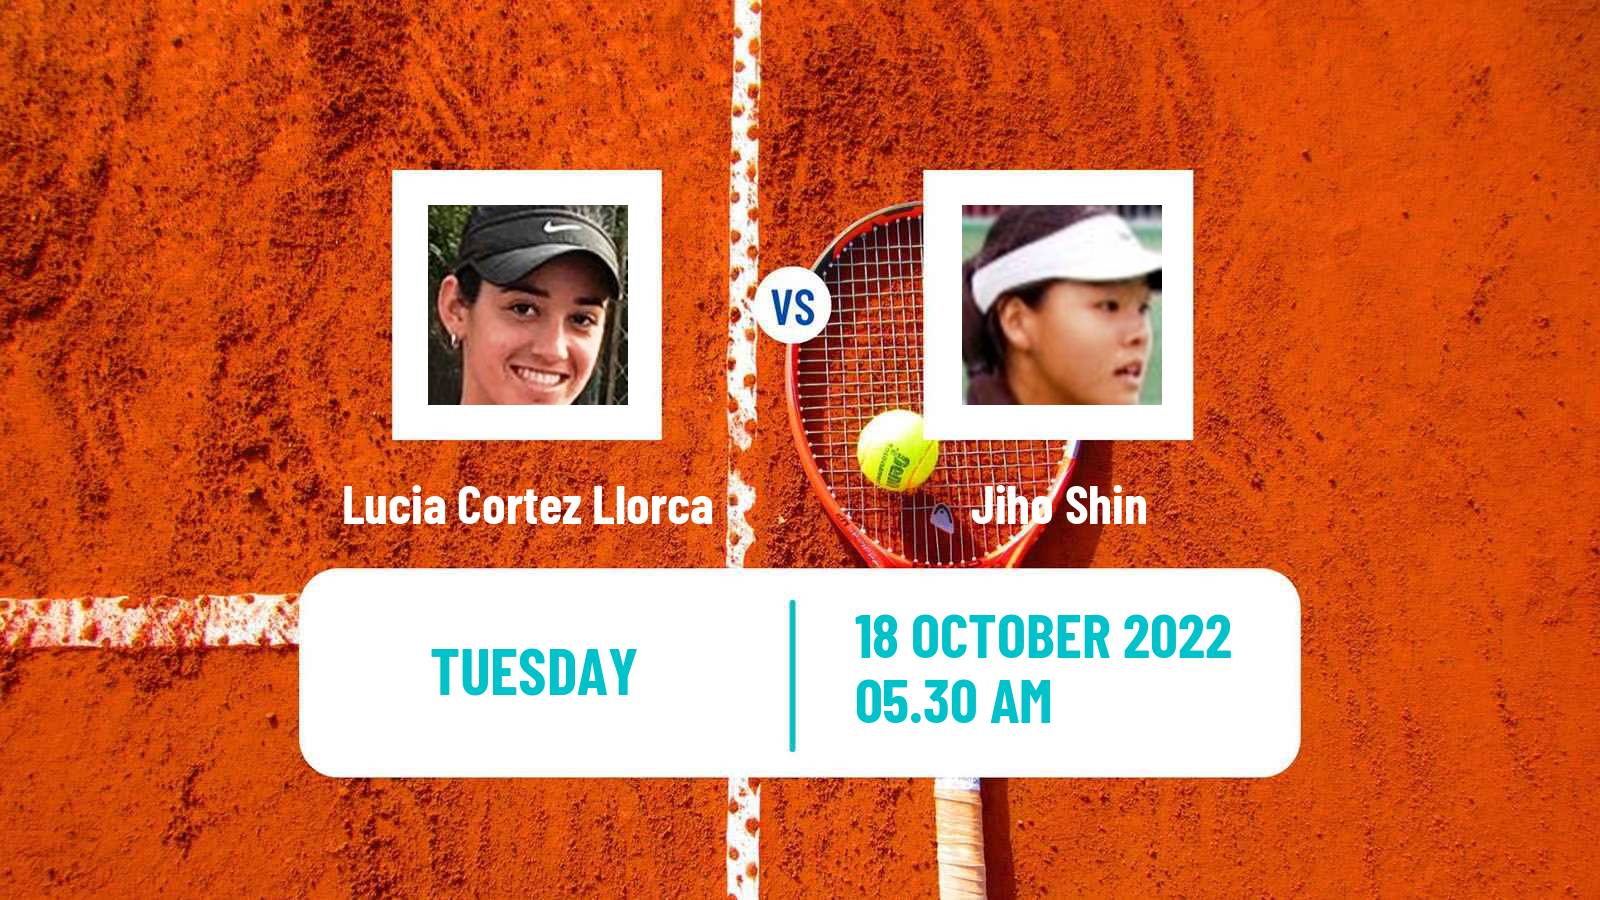 Tennis ITF Tournaments Lucia Cortez Llorca - Jiho Shin